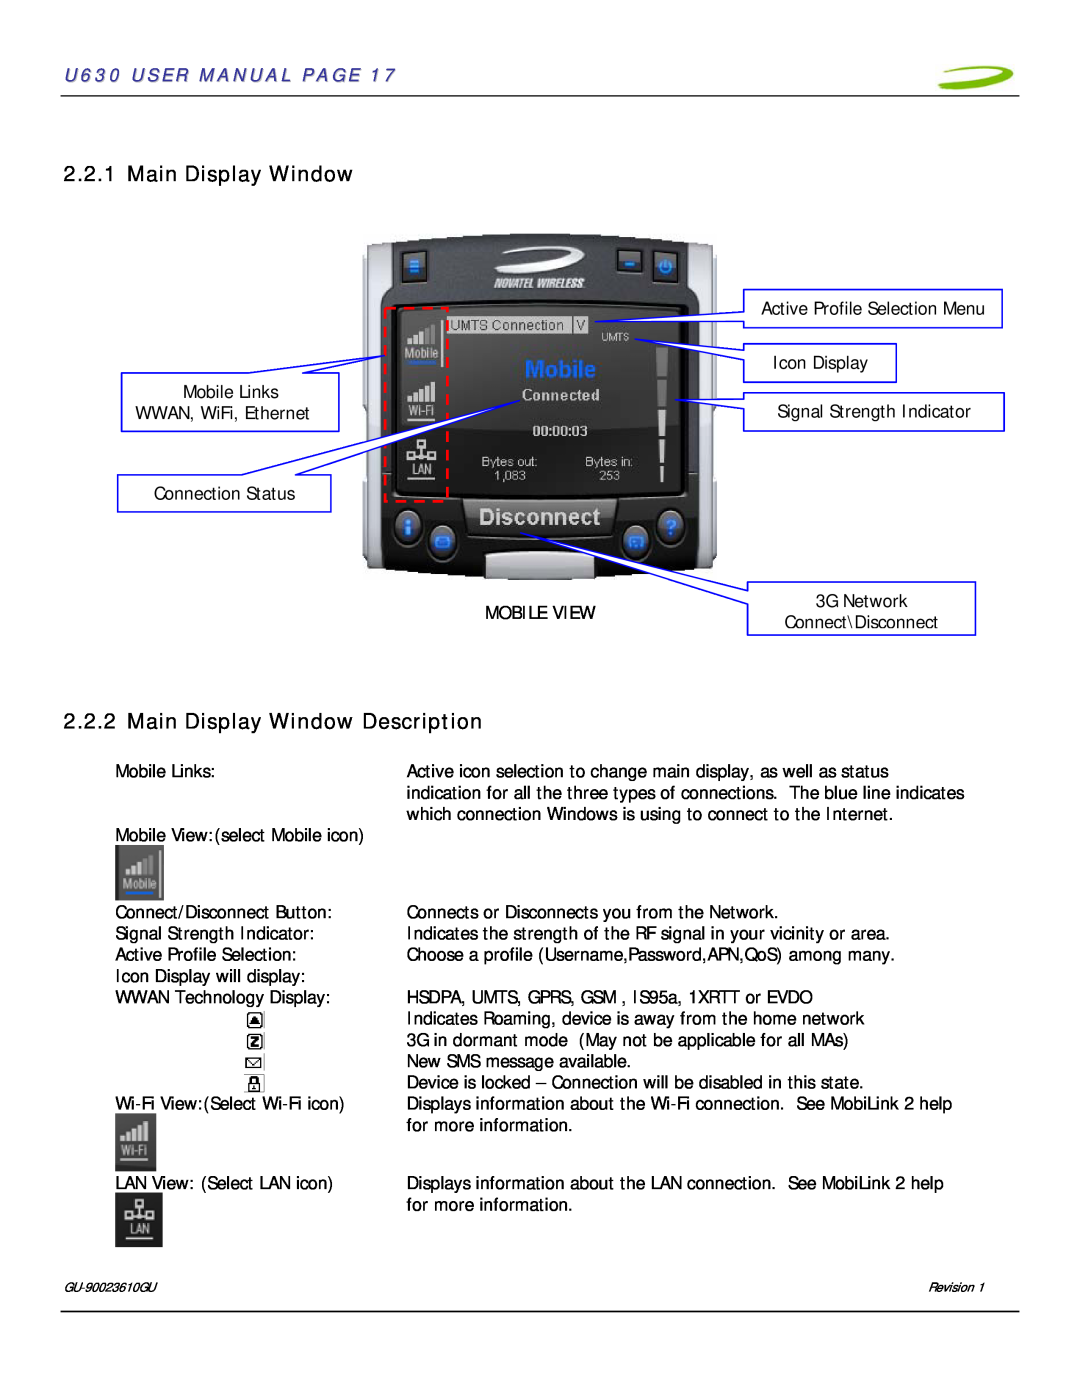 InFocus user manual Main Display Window Description, U630 USER MANUAL PAGE 